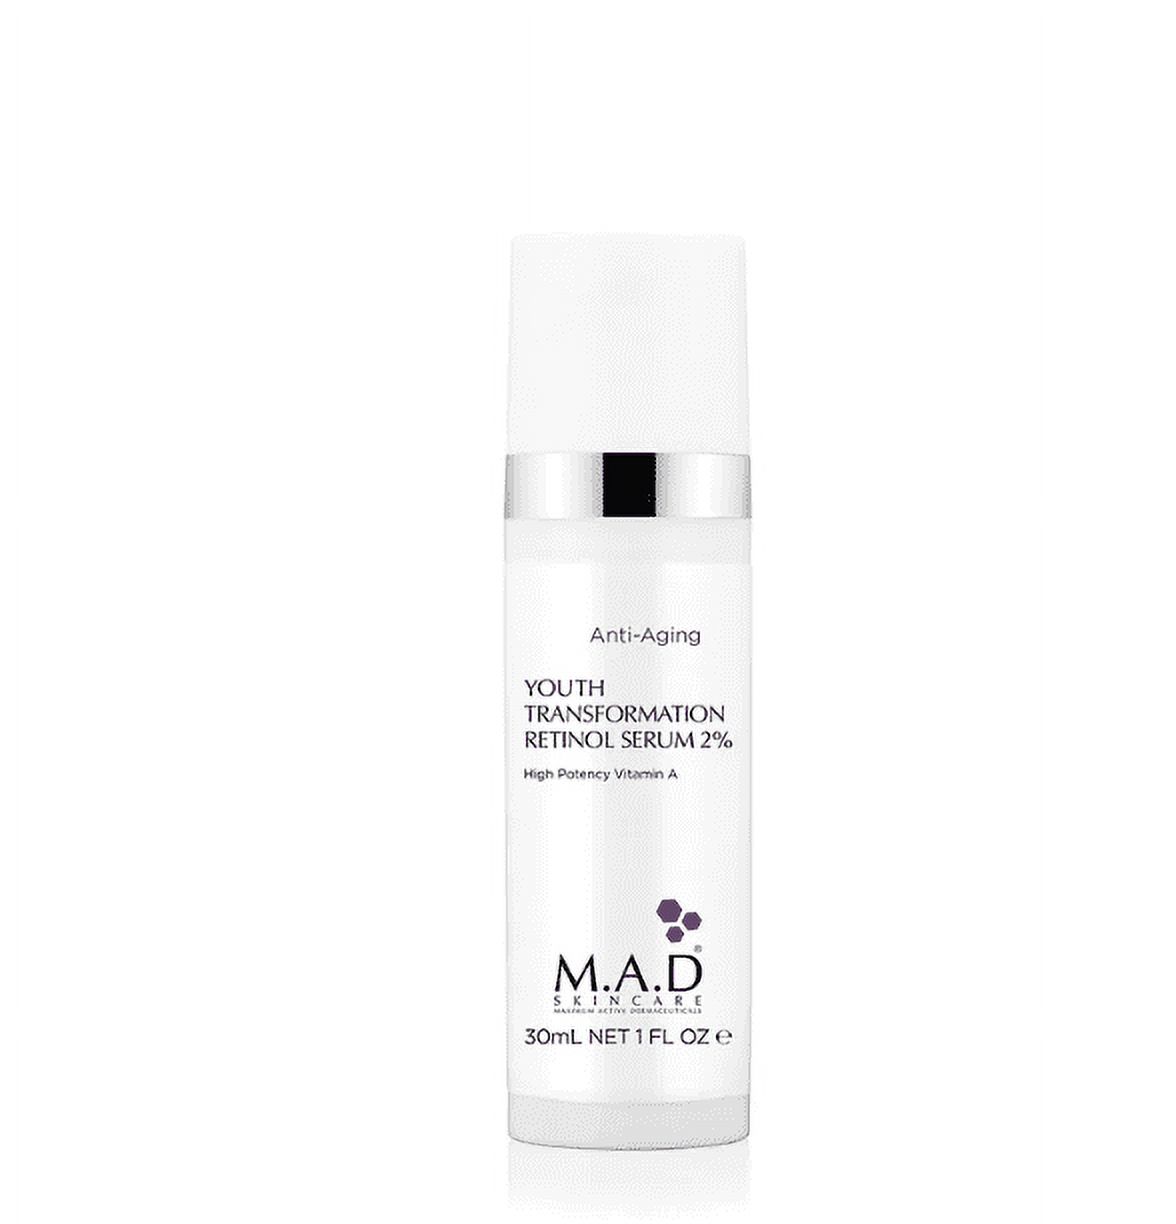 M.A.D Skincare Anti-Aging Youth Transformation Retinol Serum 2%  (1 oz.) - image 1 of 1